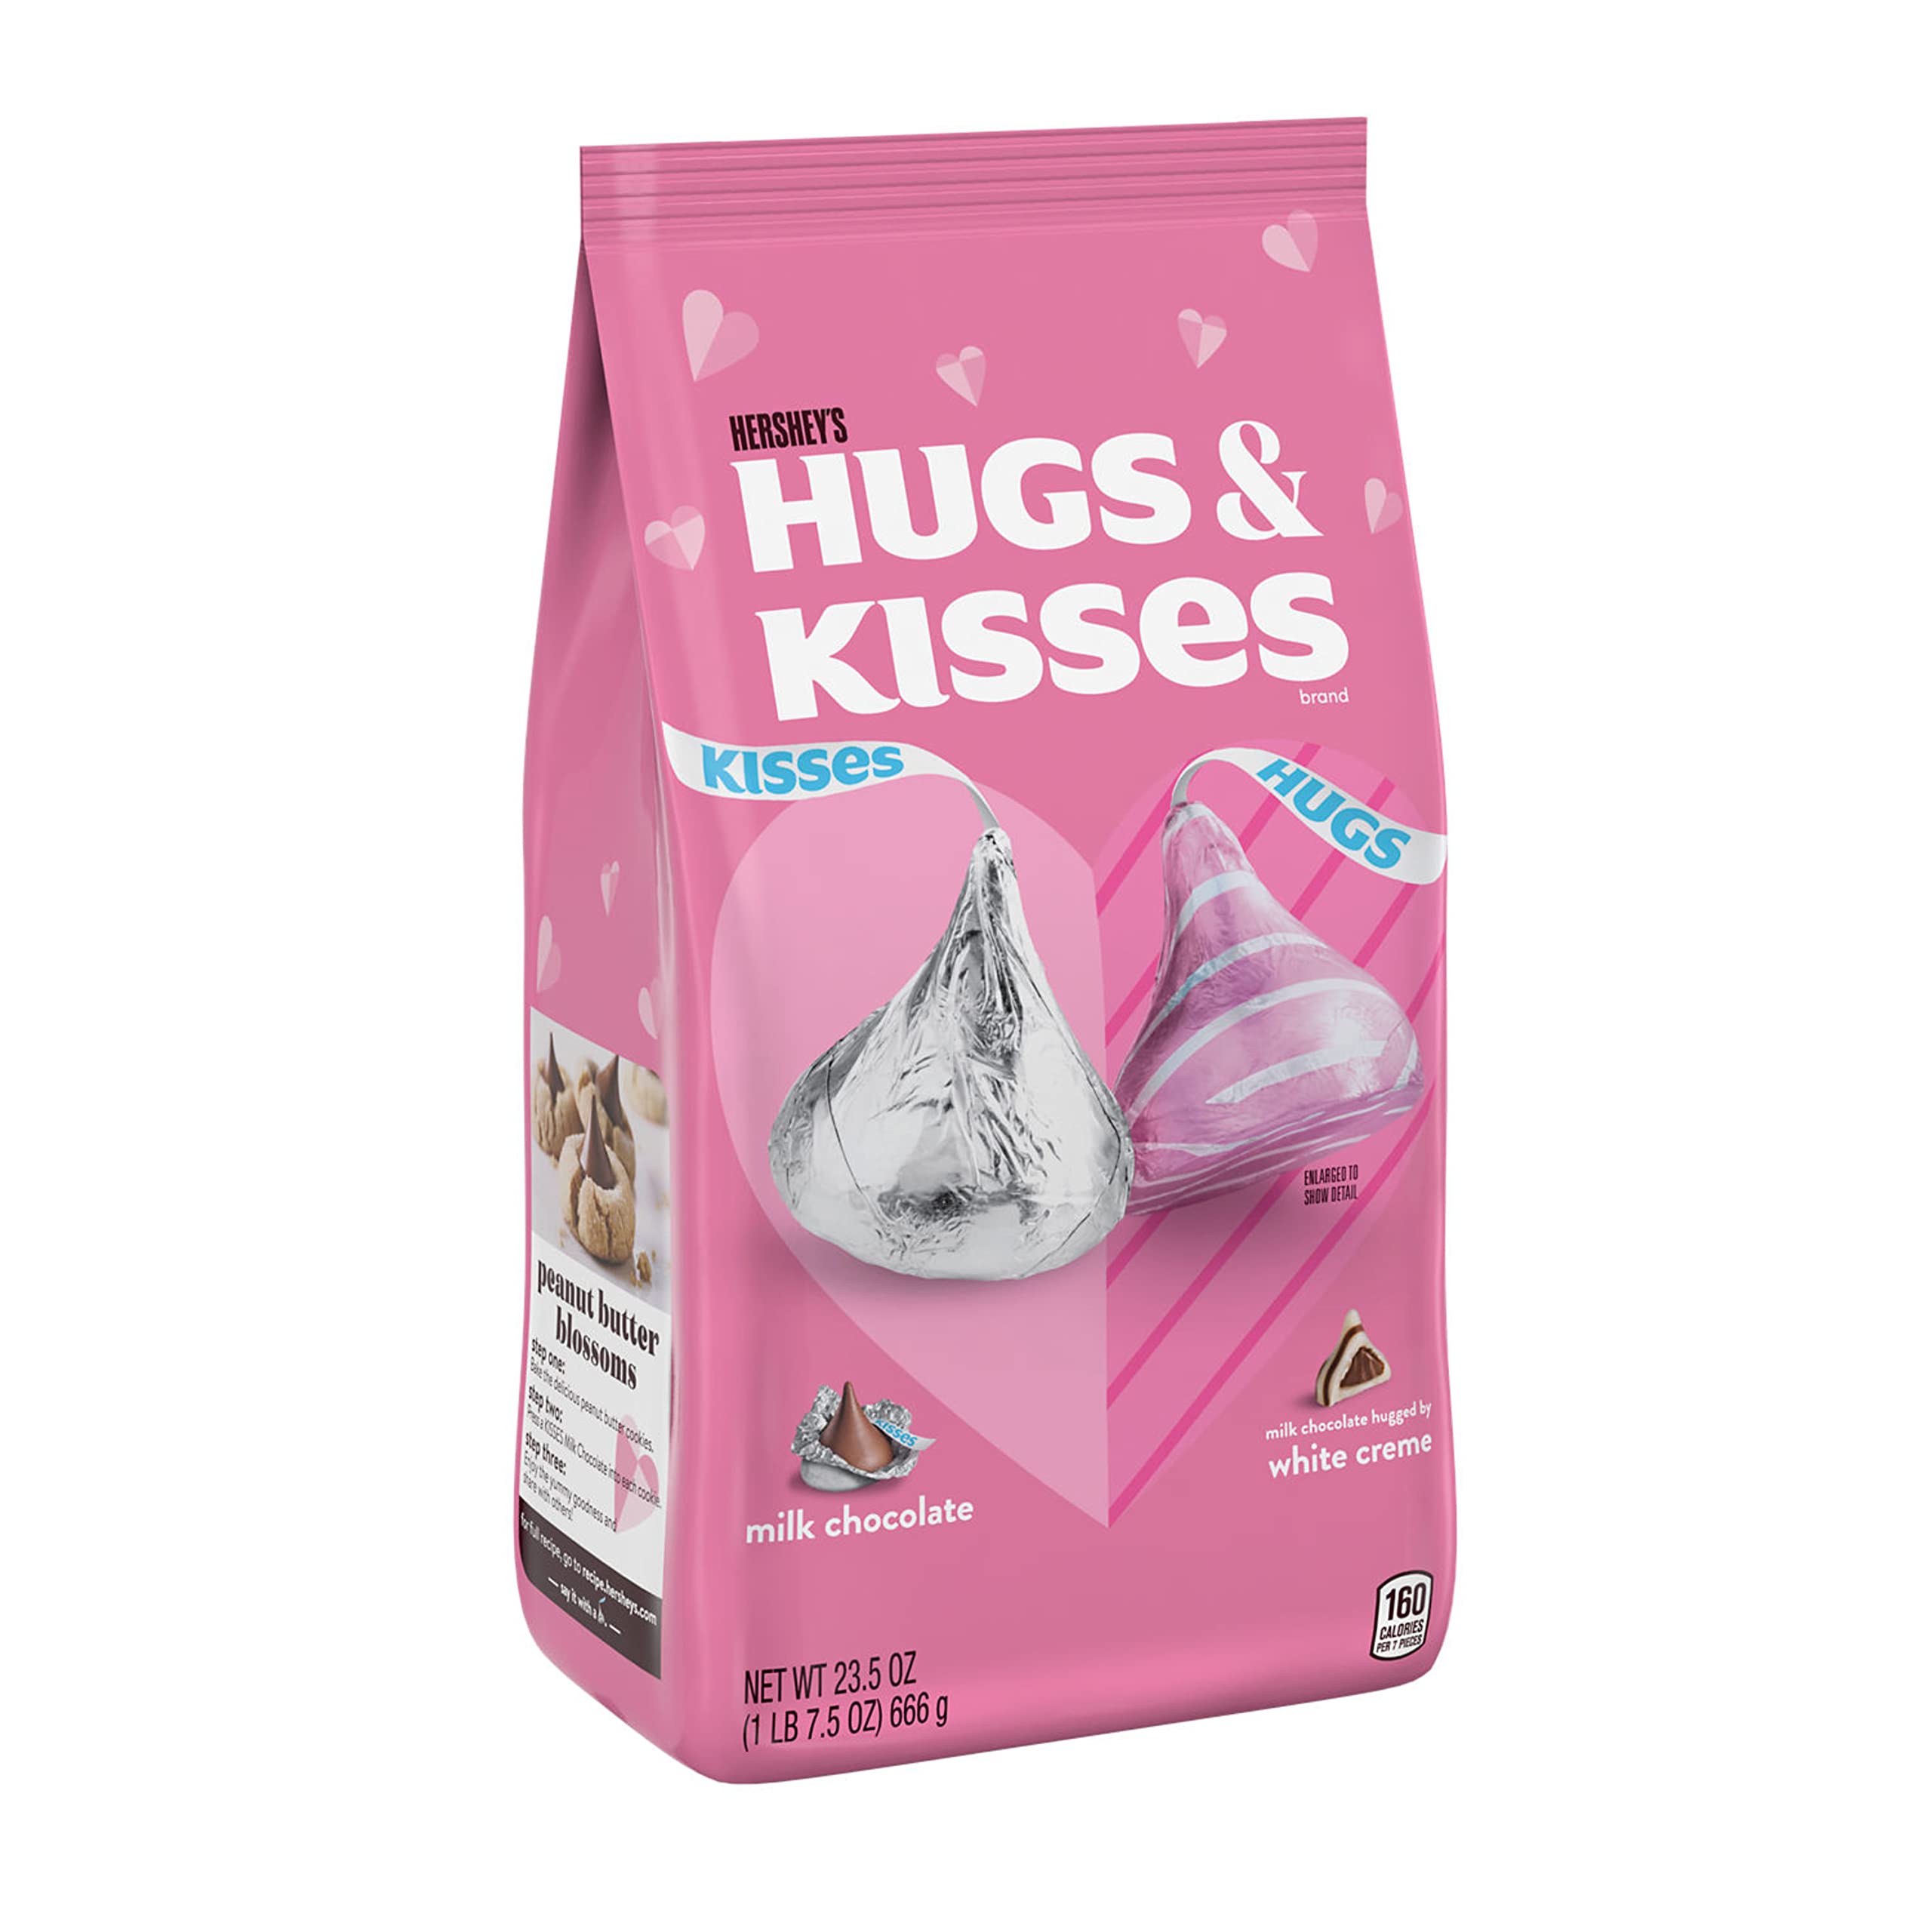 HERSHEY'S HUGS & KISSES